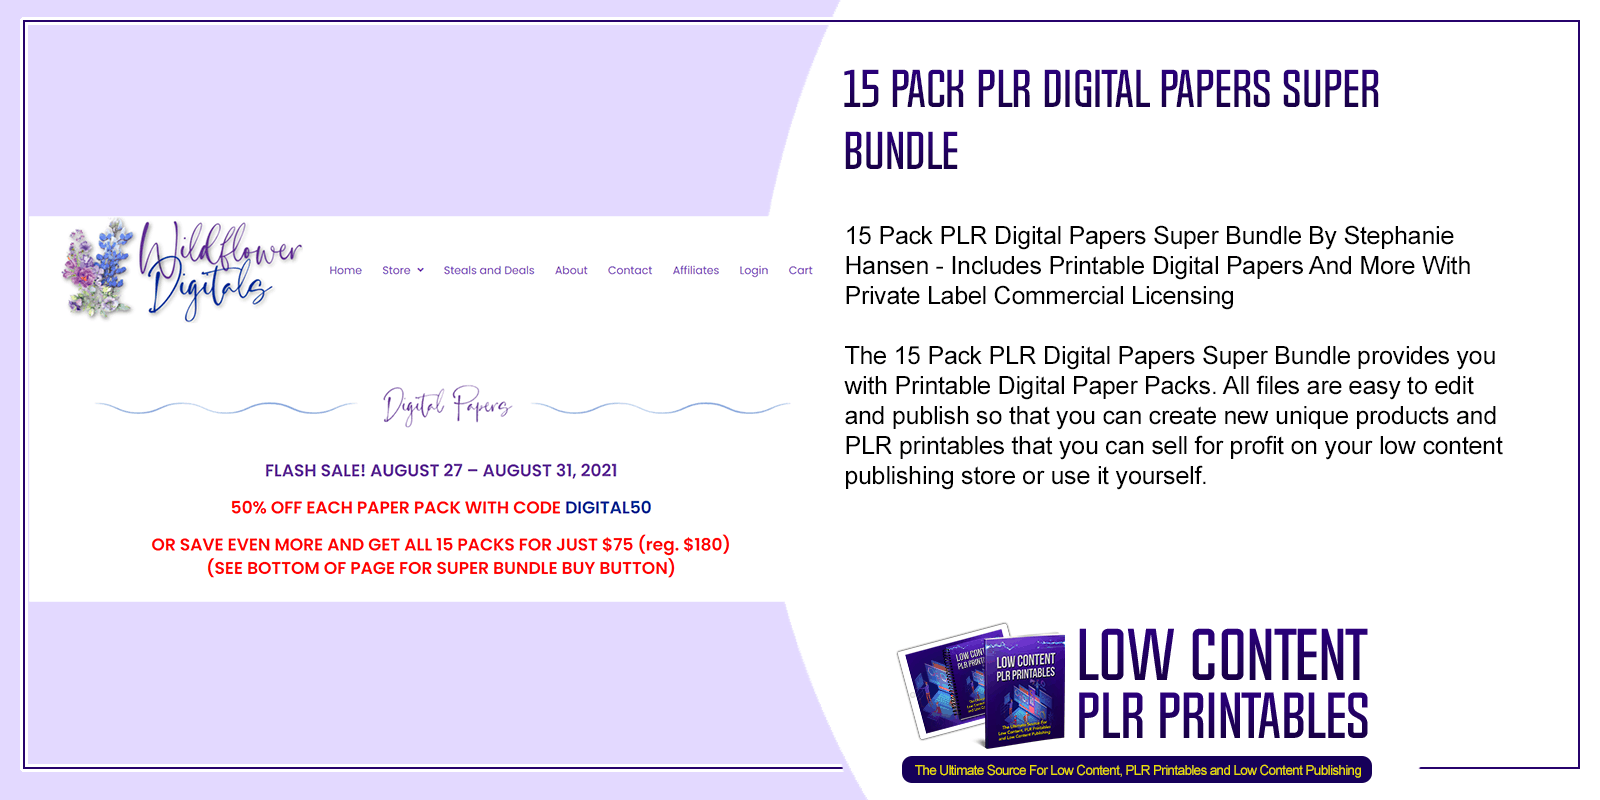 15 Pack PLR Digital Papers Super Bundle